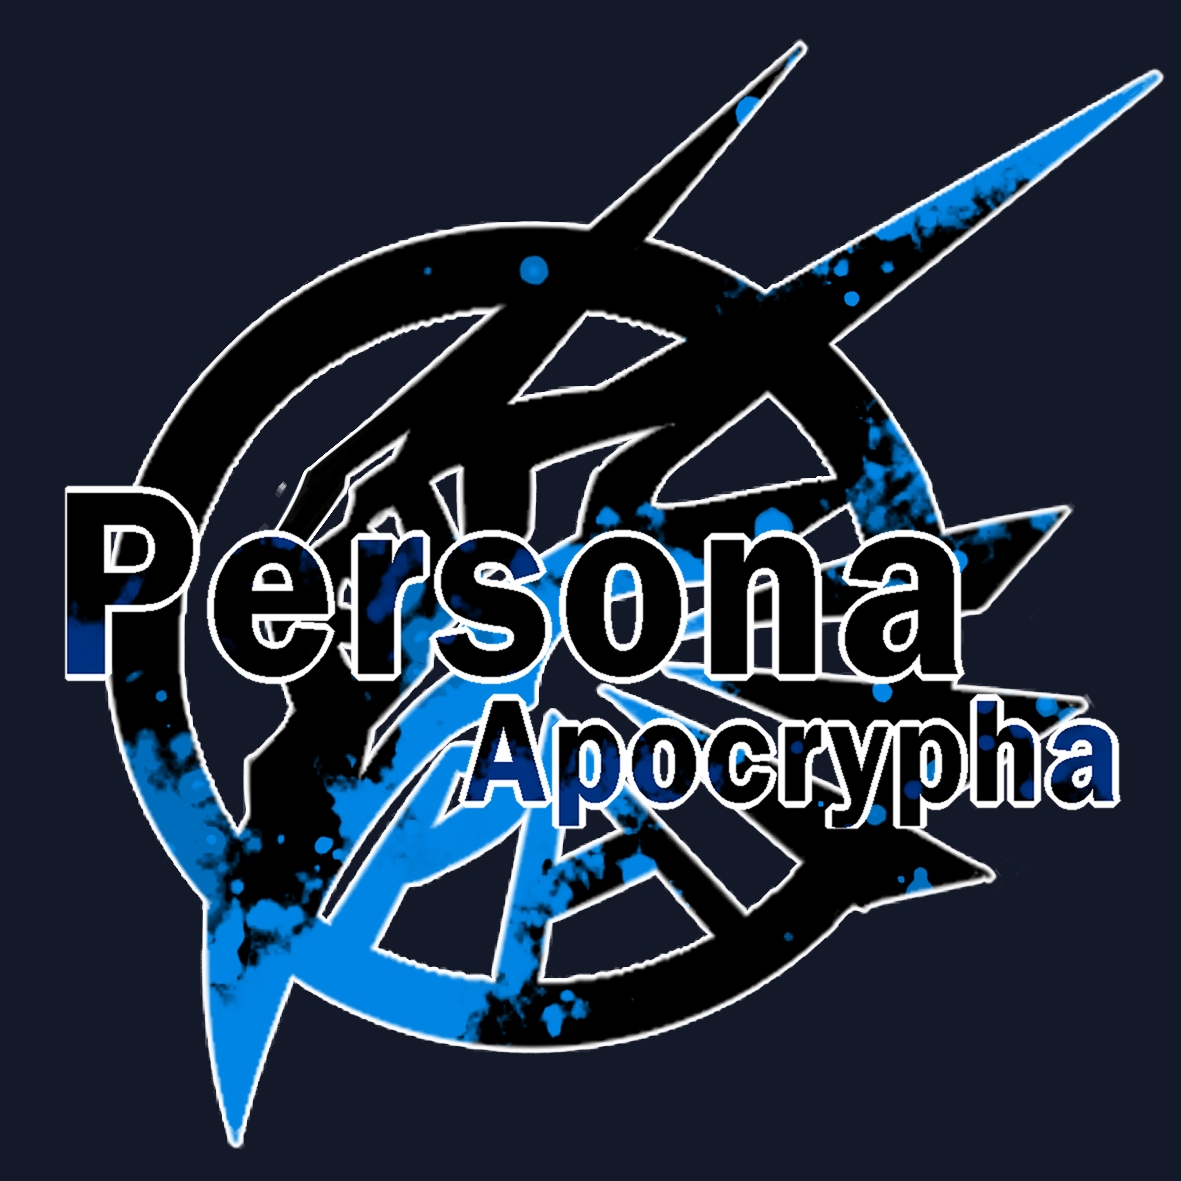 Persona Apocrypha